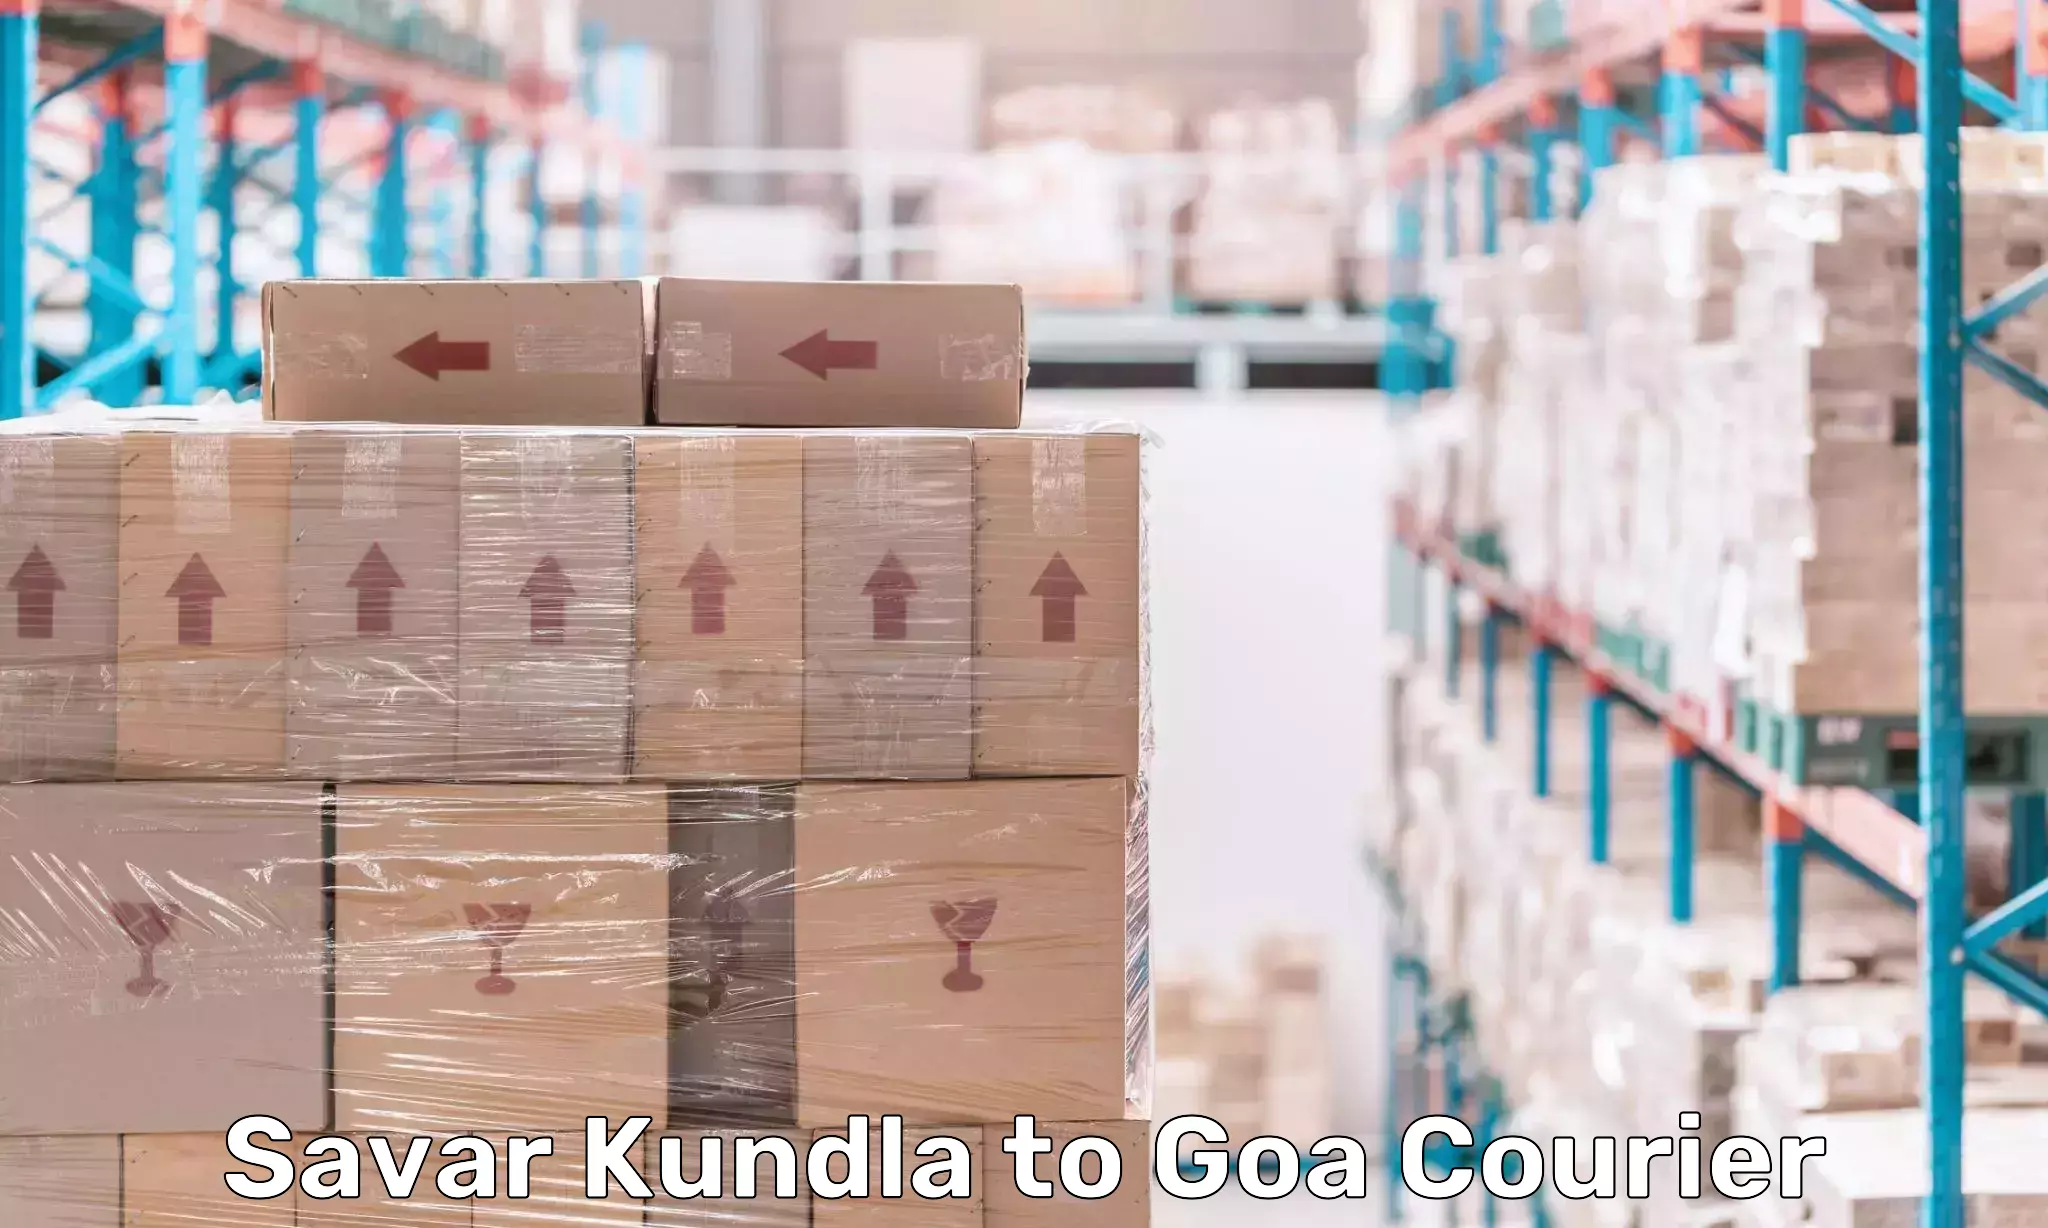 User-friendly delivery service Savar Kundla to Goa